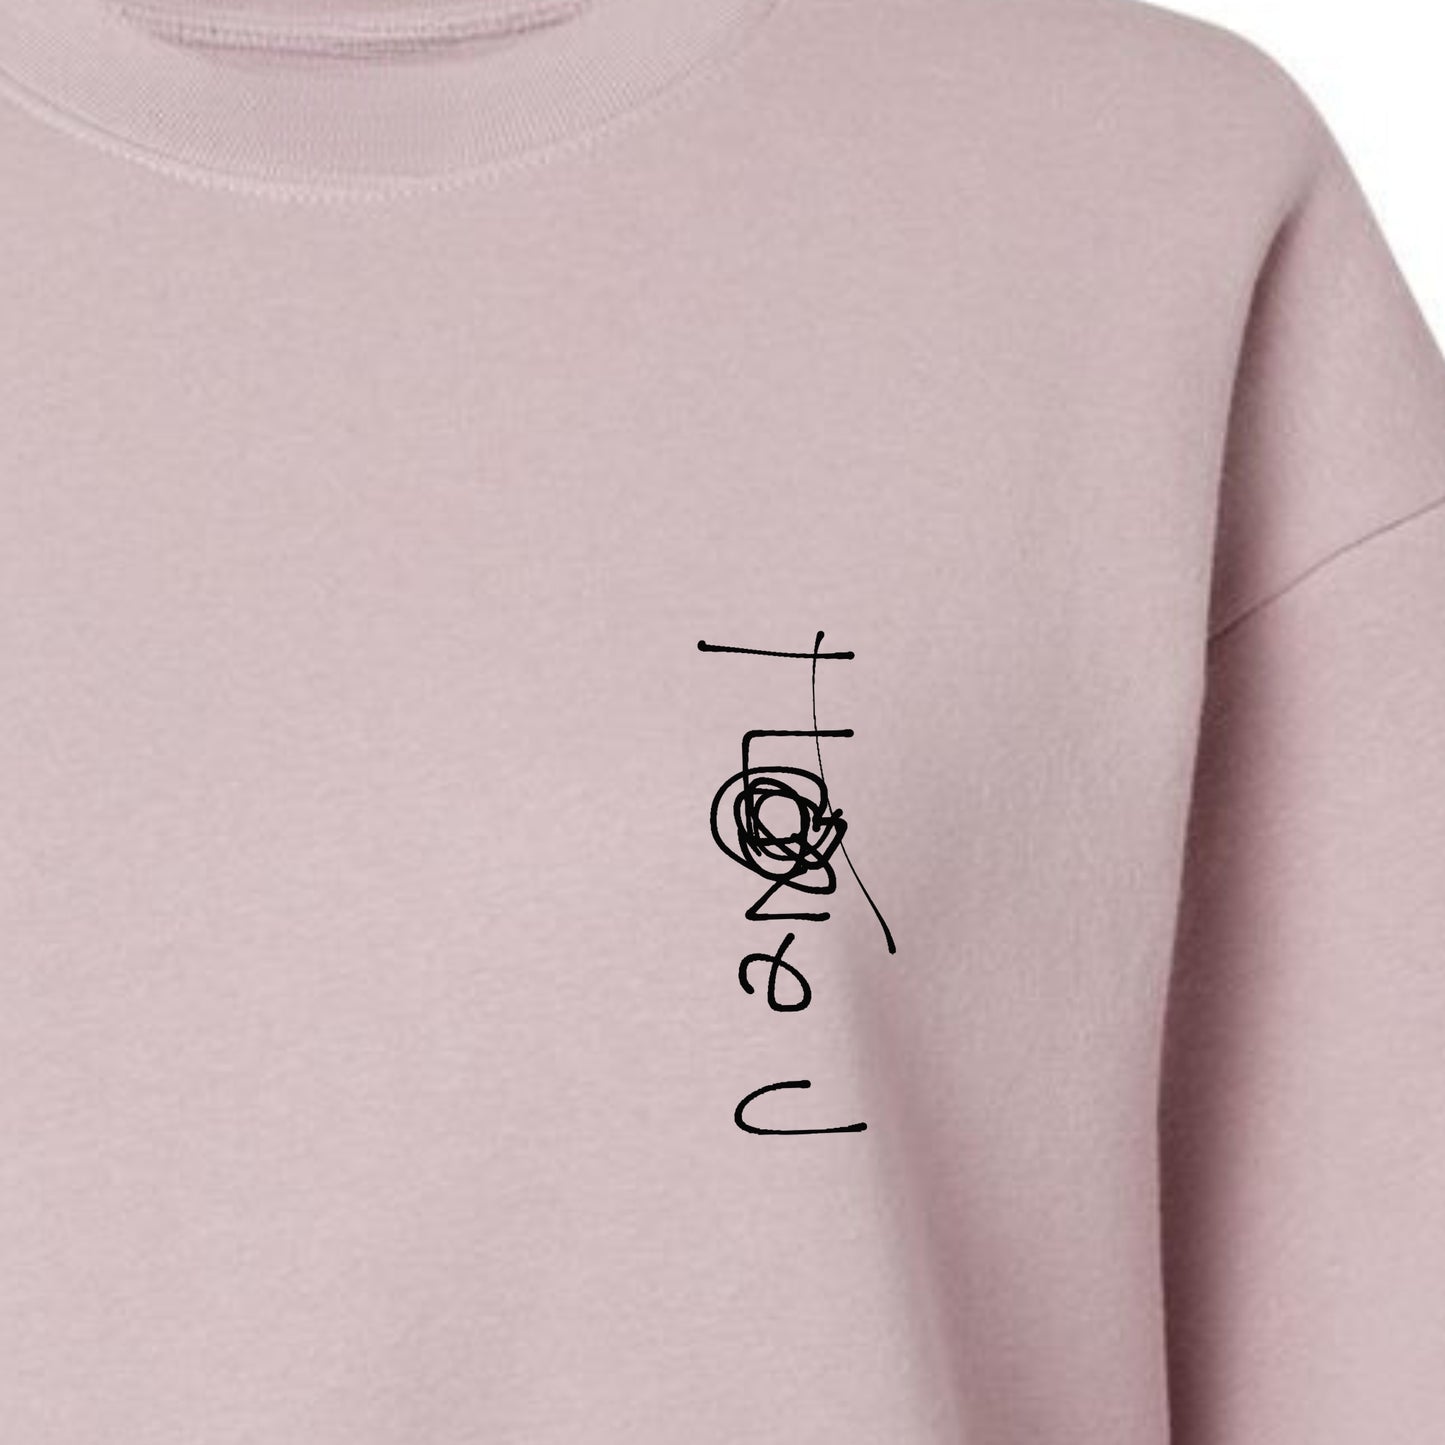 Womens 'I Love U' fleece crewneck sweater - Pink